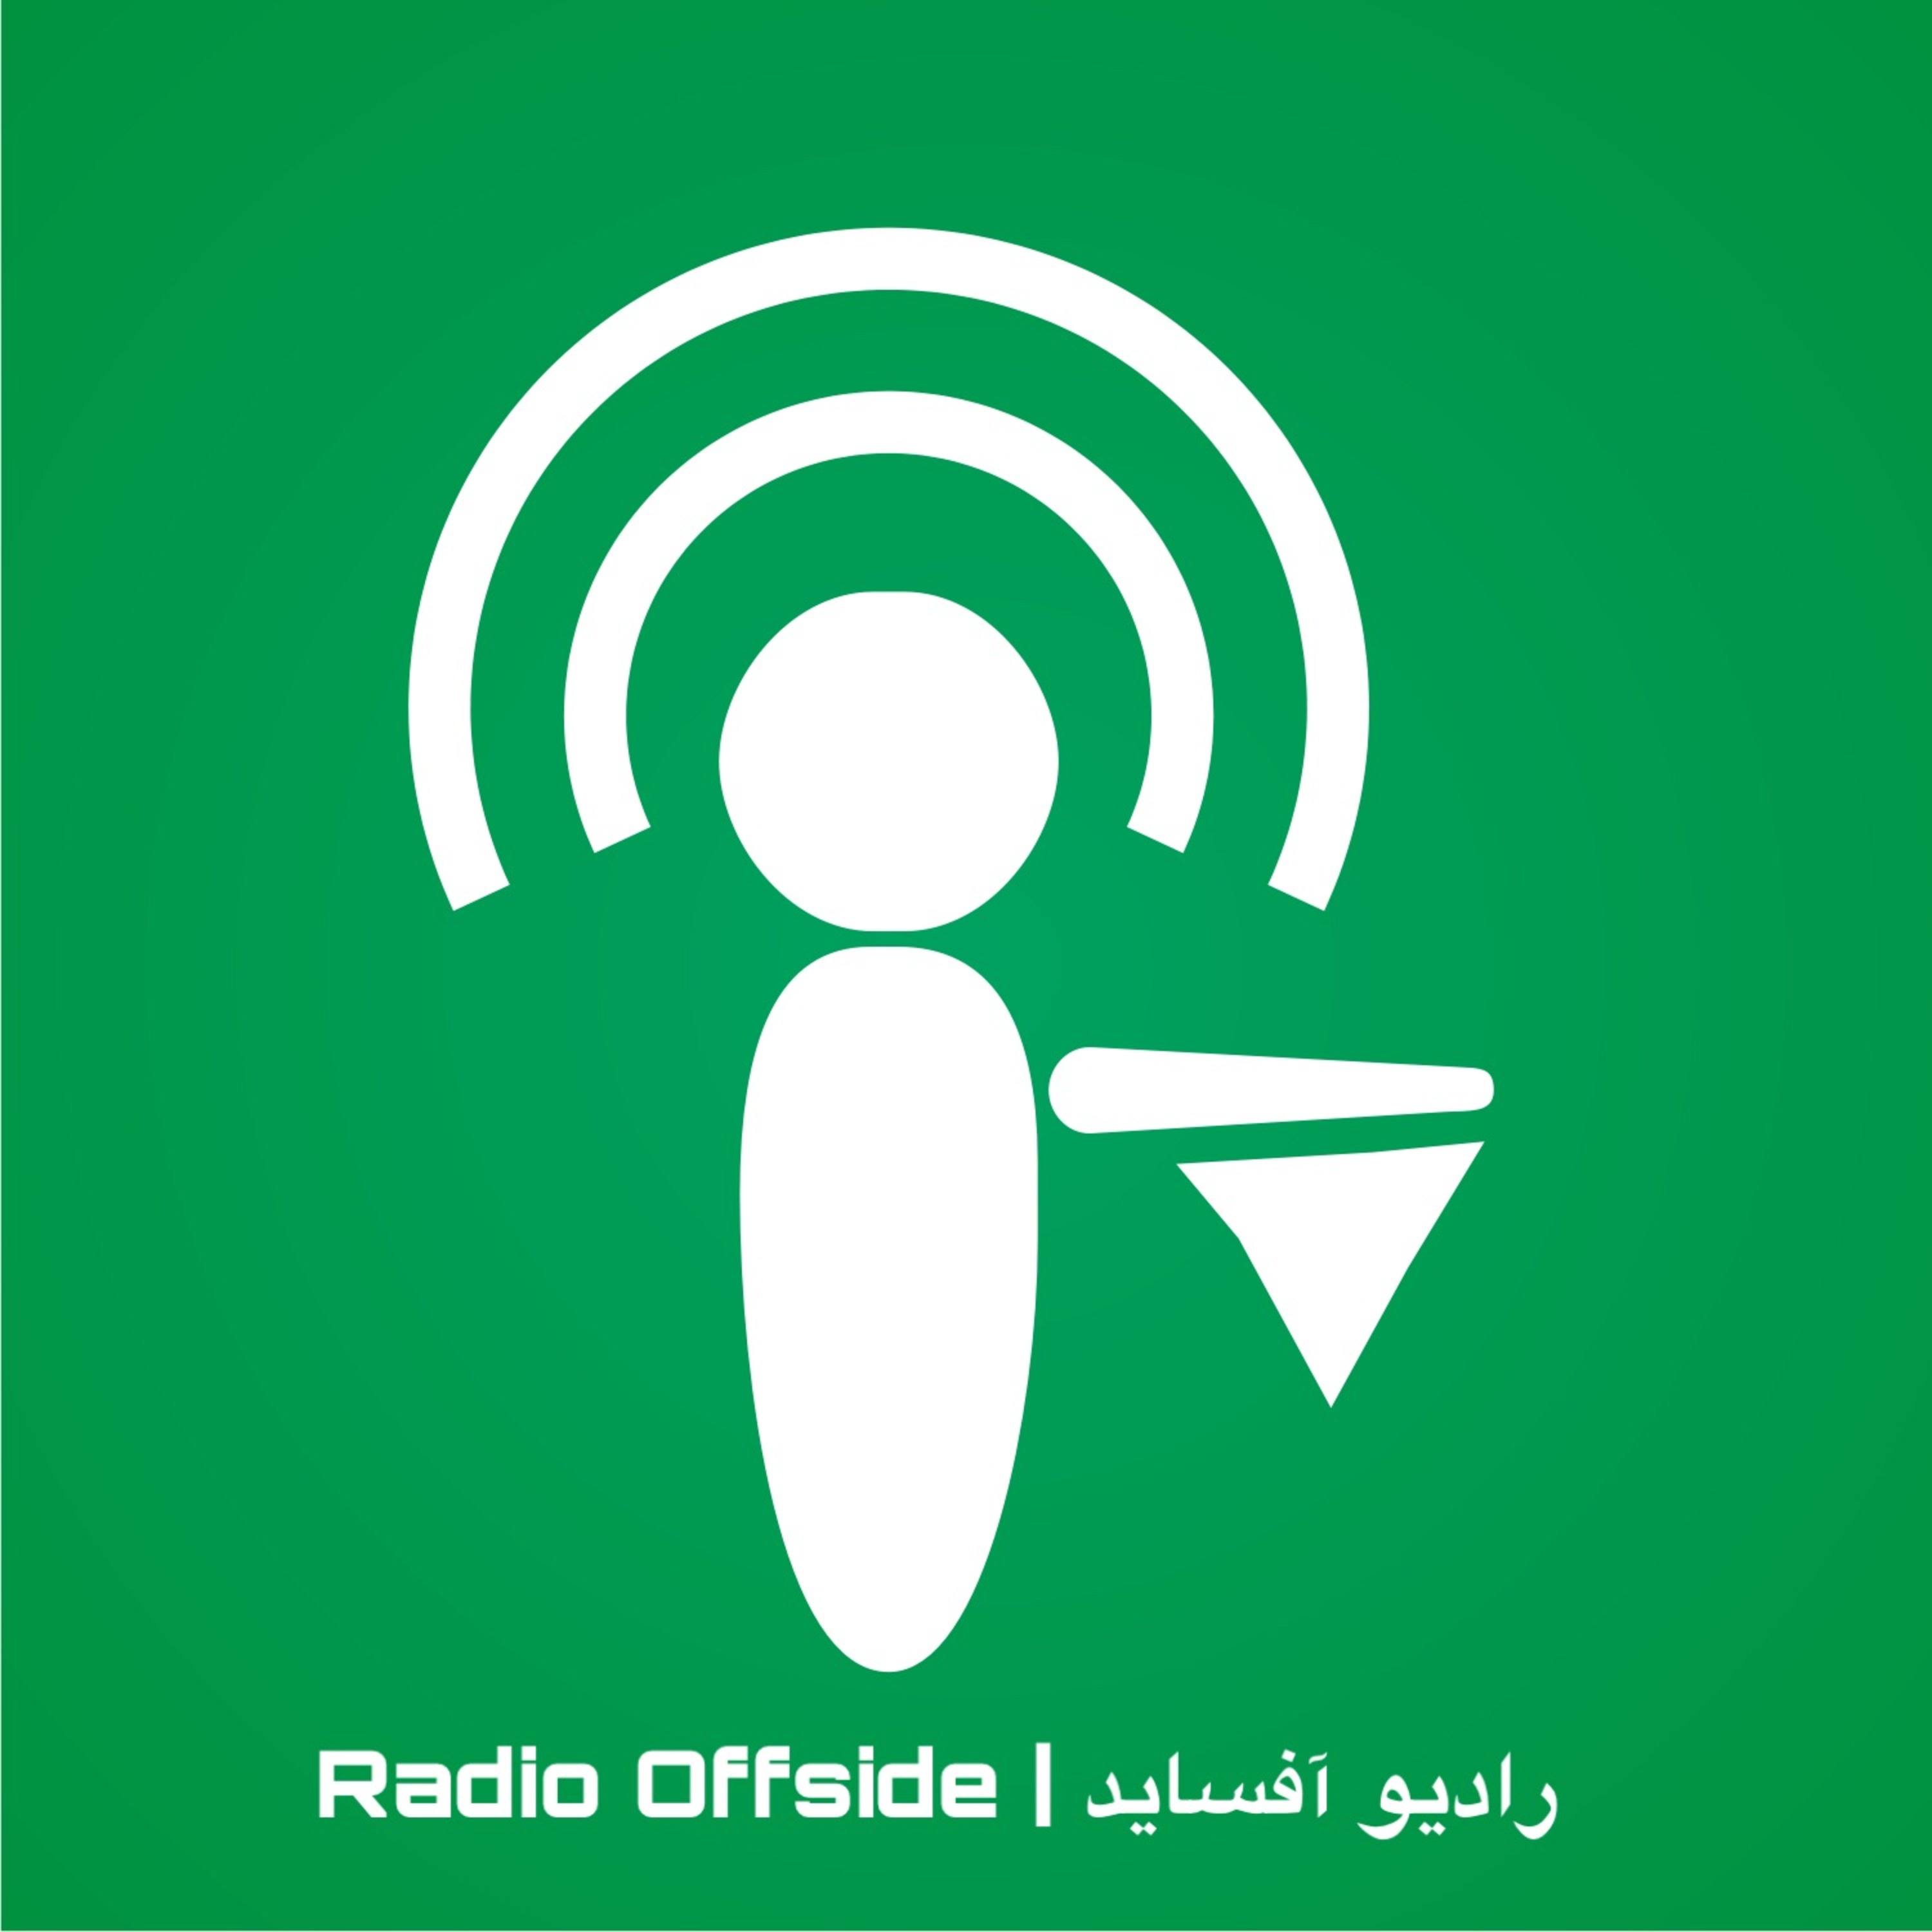 Radio Offside | پادکست فوتبالی رادیو آفساید